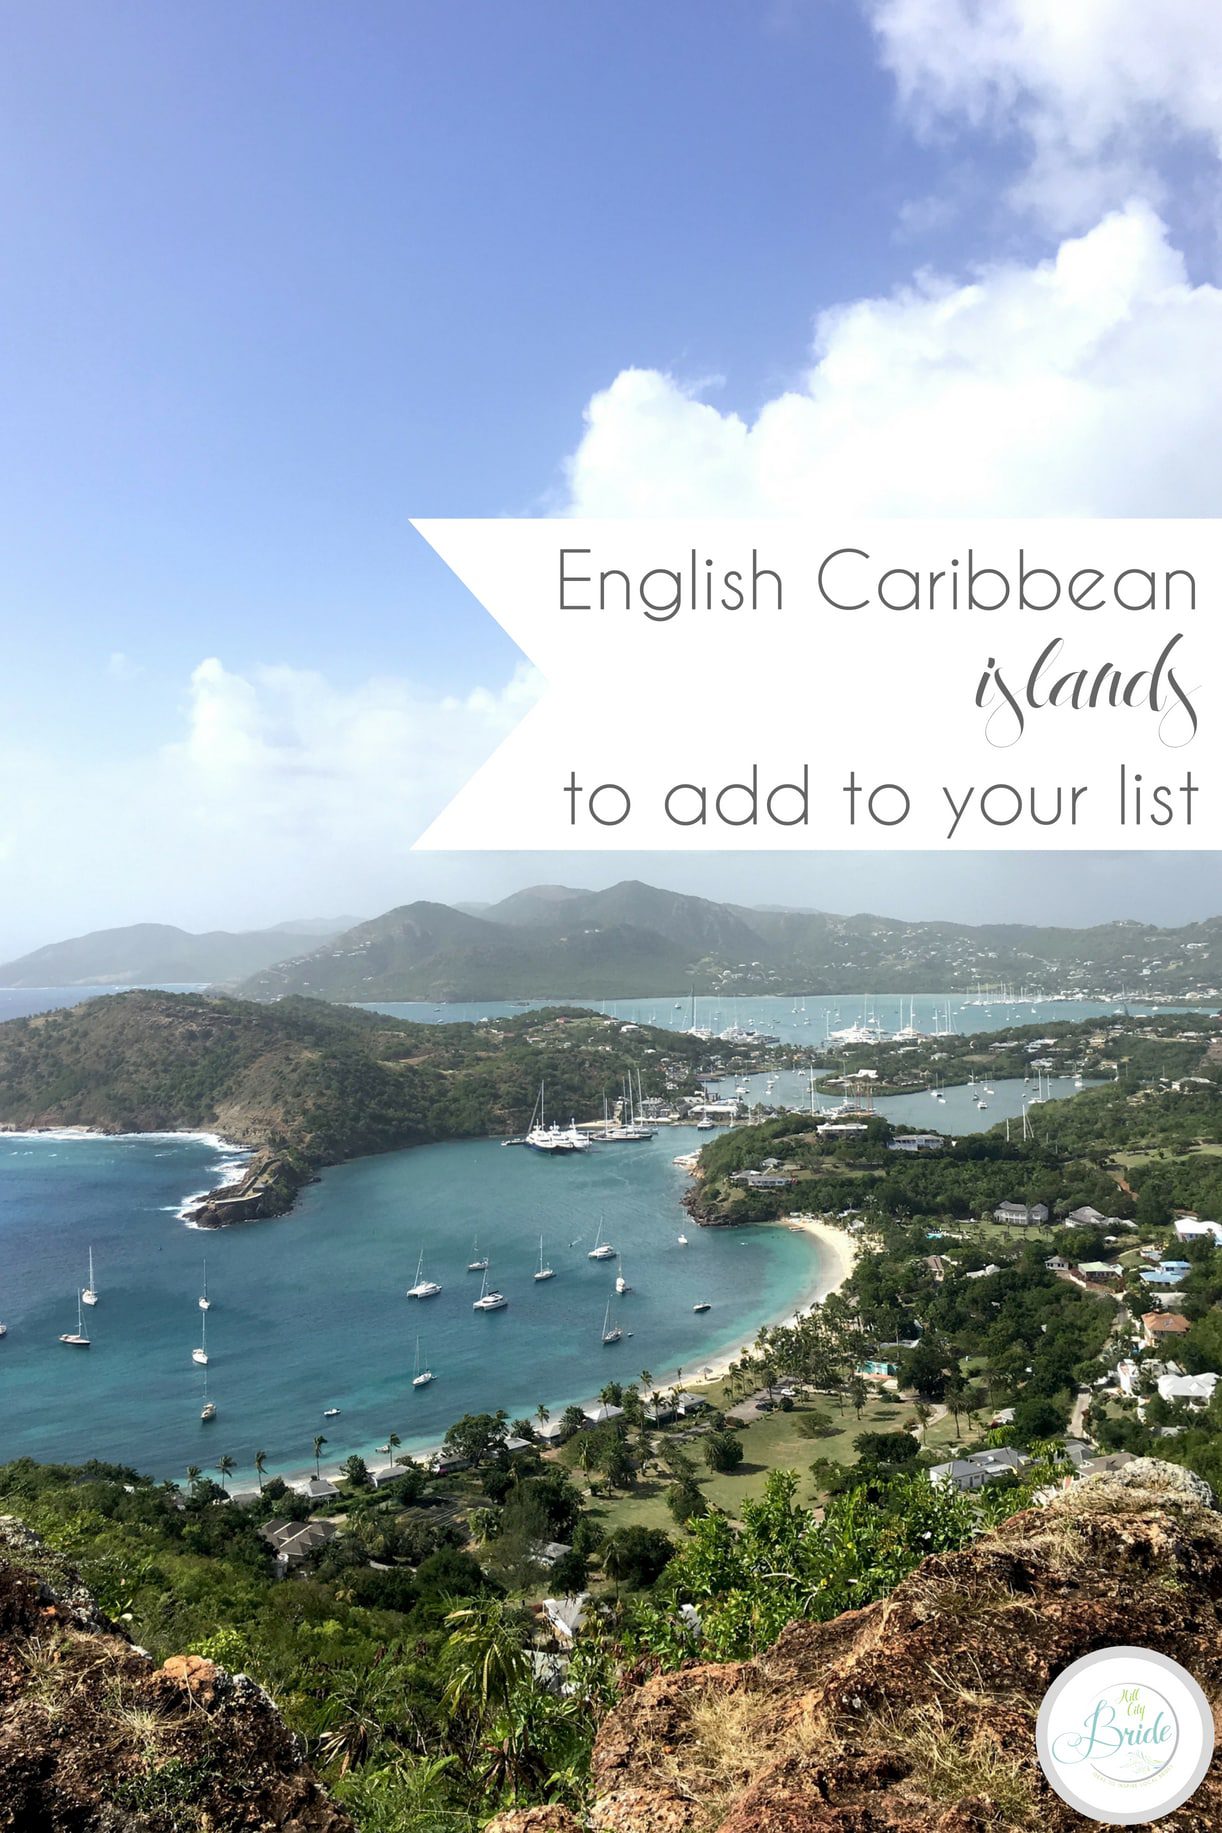 English Caribbean Islands Windstar Cruises | Hill City Bride Destination Wedding Travel Blog